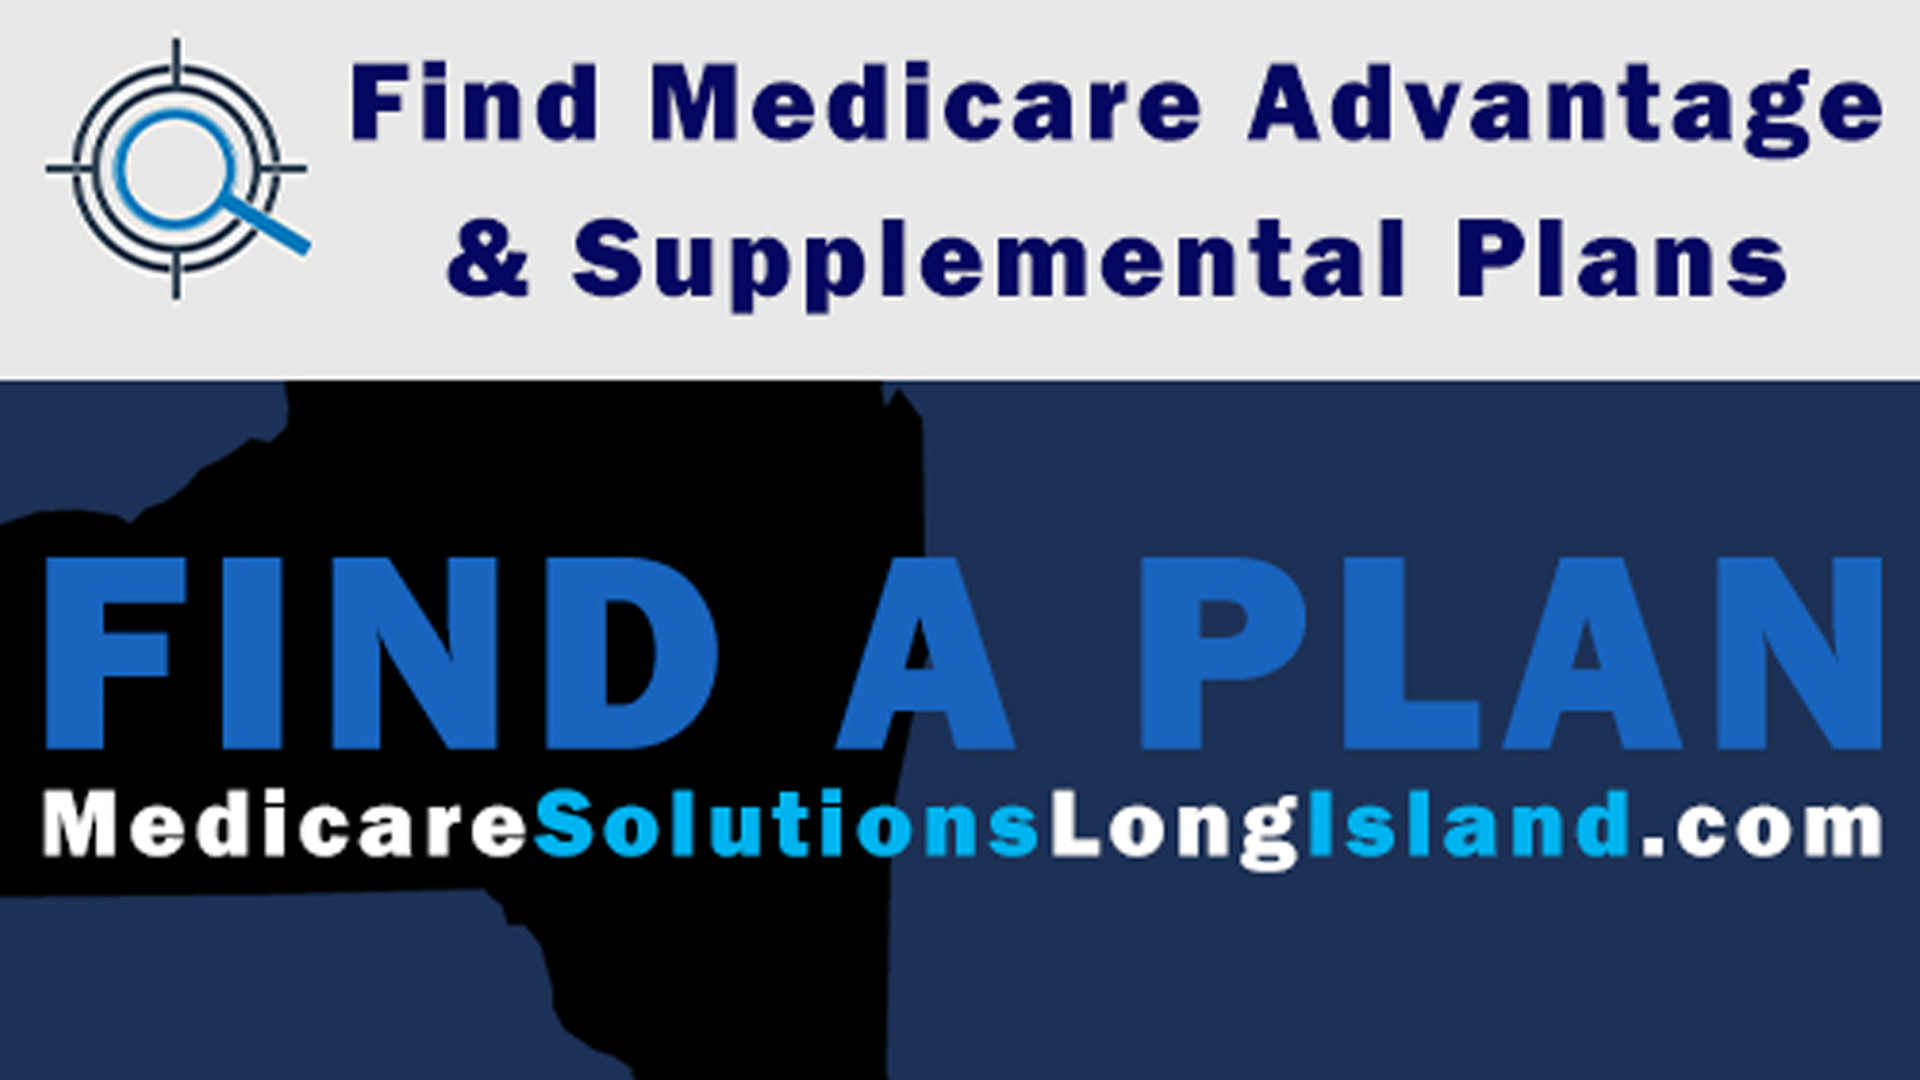 Medicare Solutions Long Island - blendnewyork